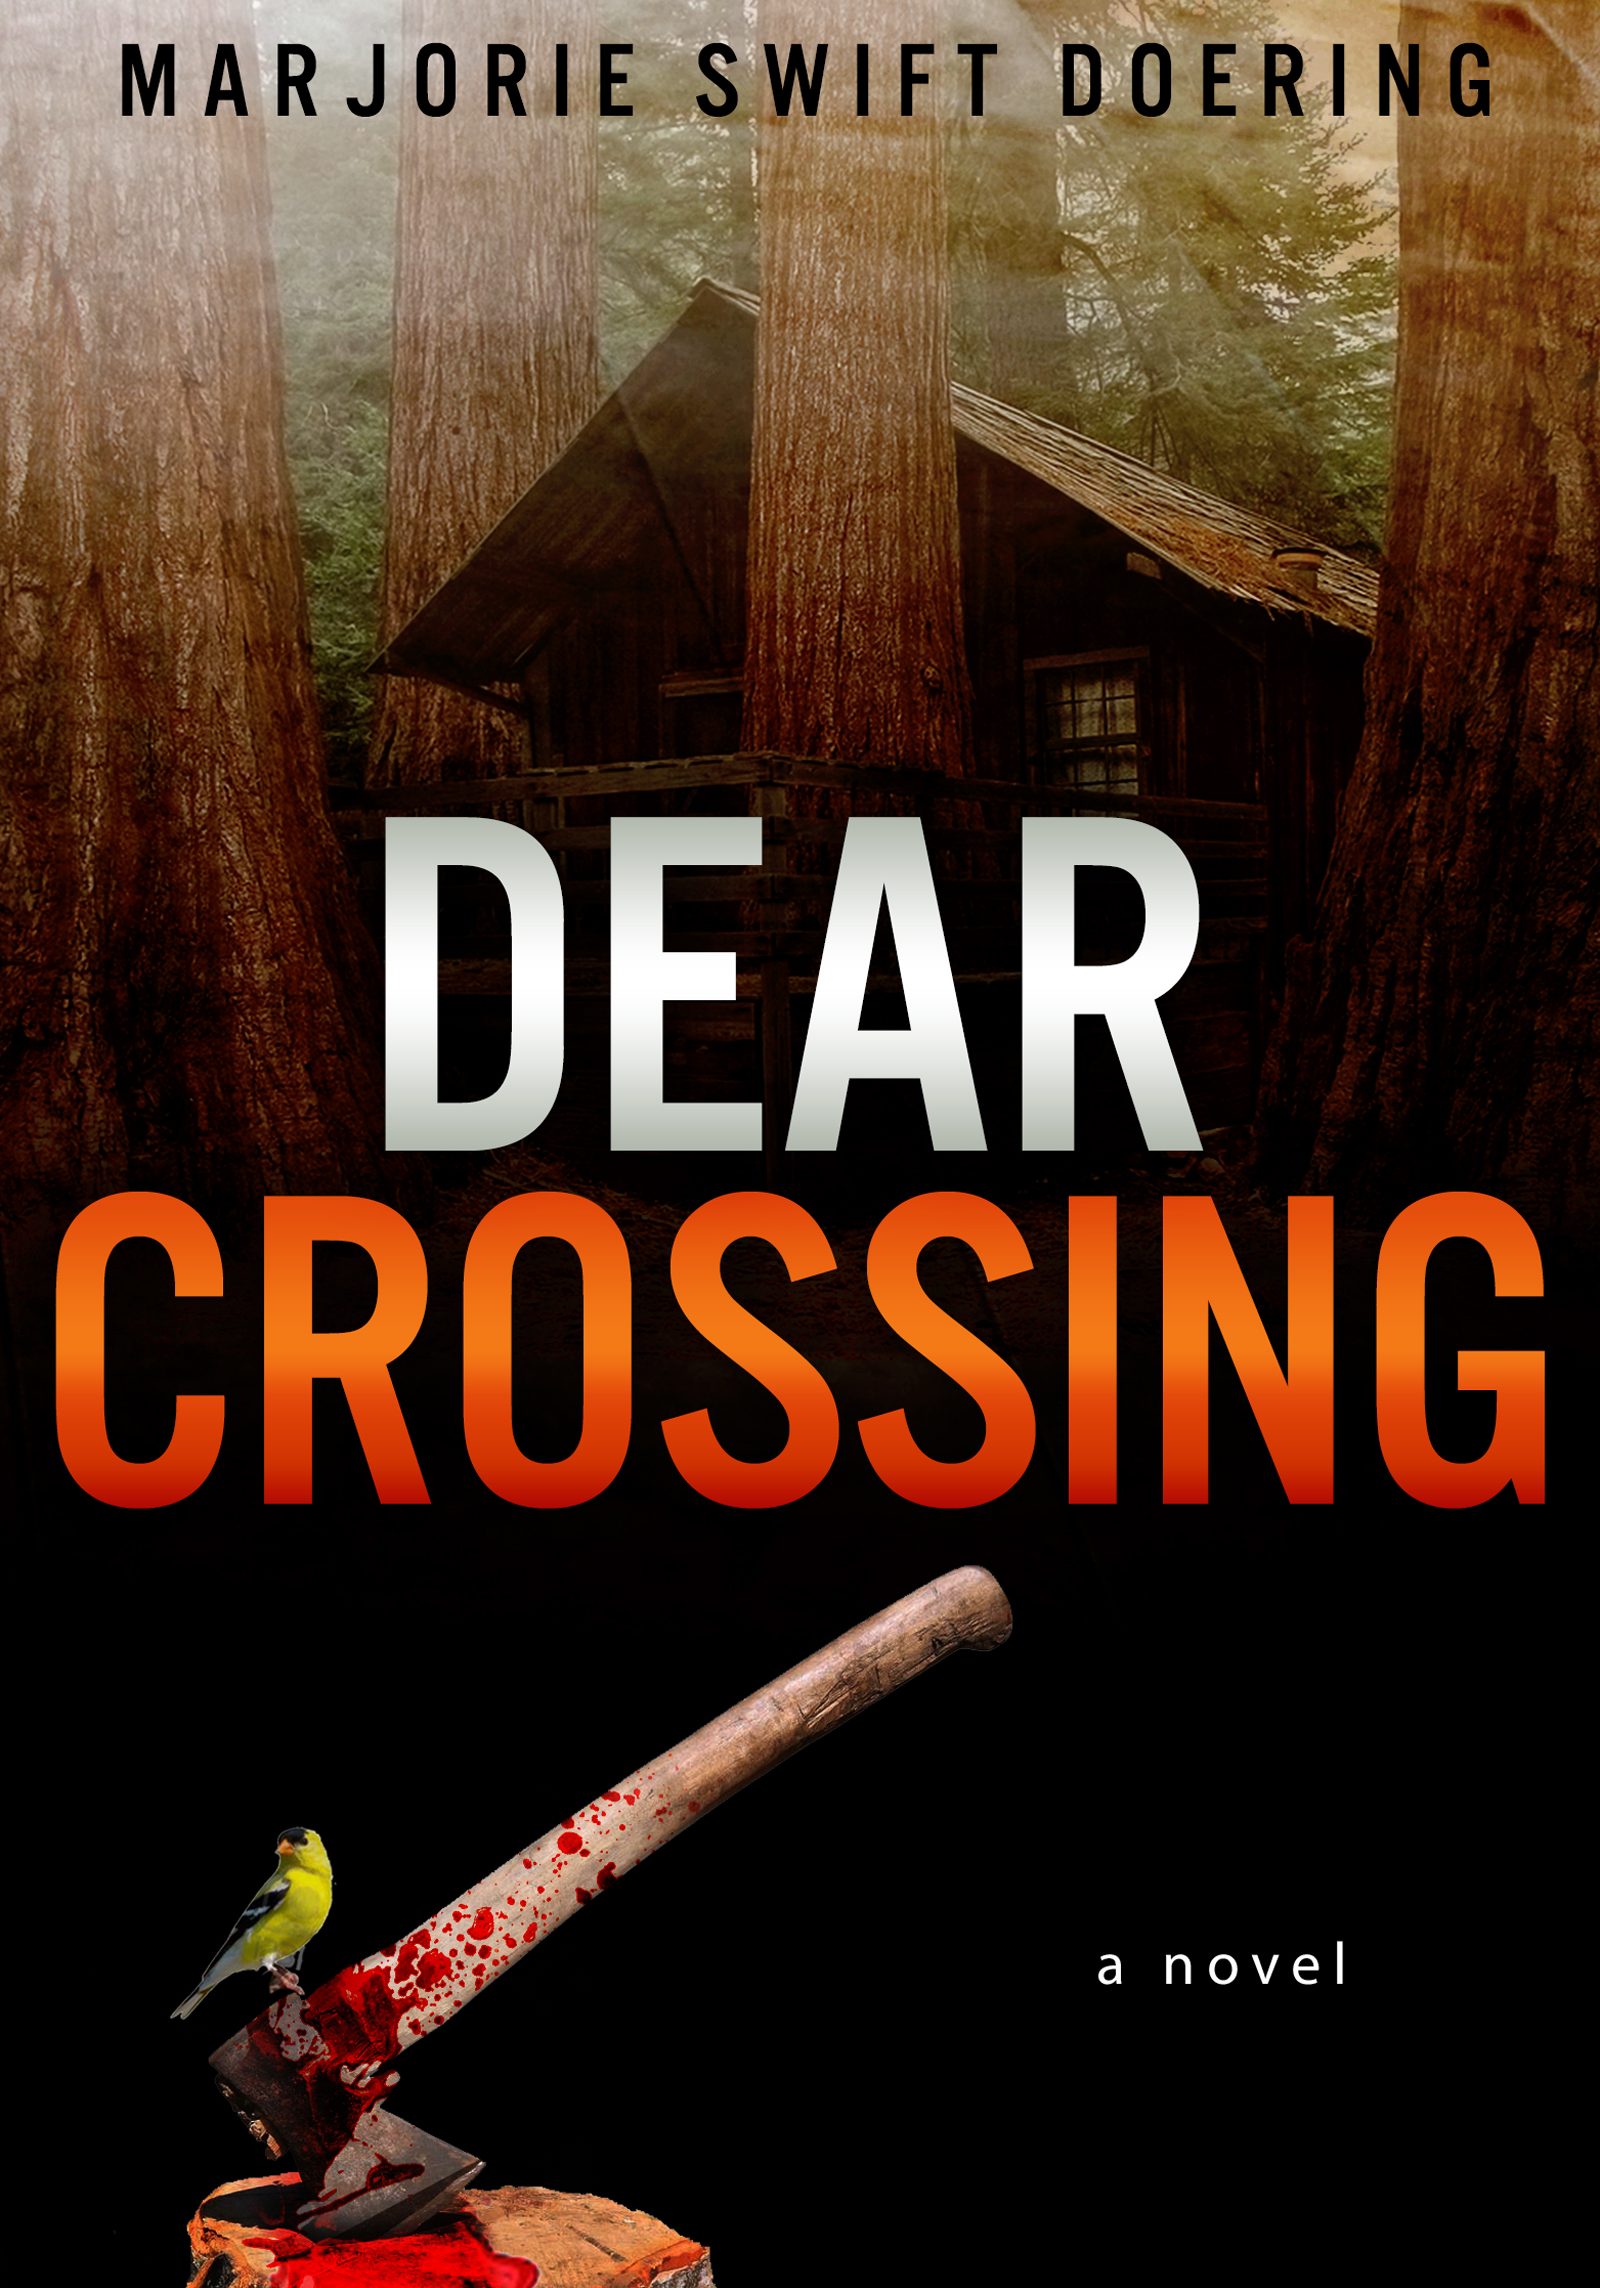 Dear Crossing book trailer loewenherz creative